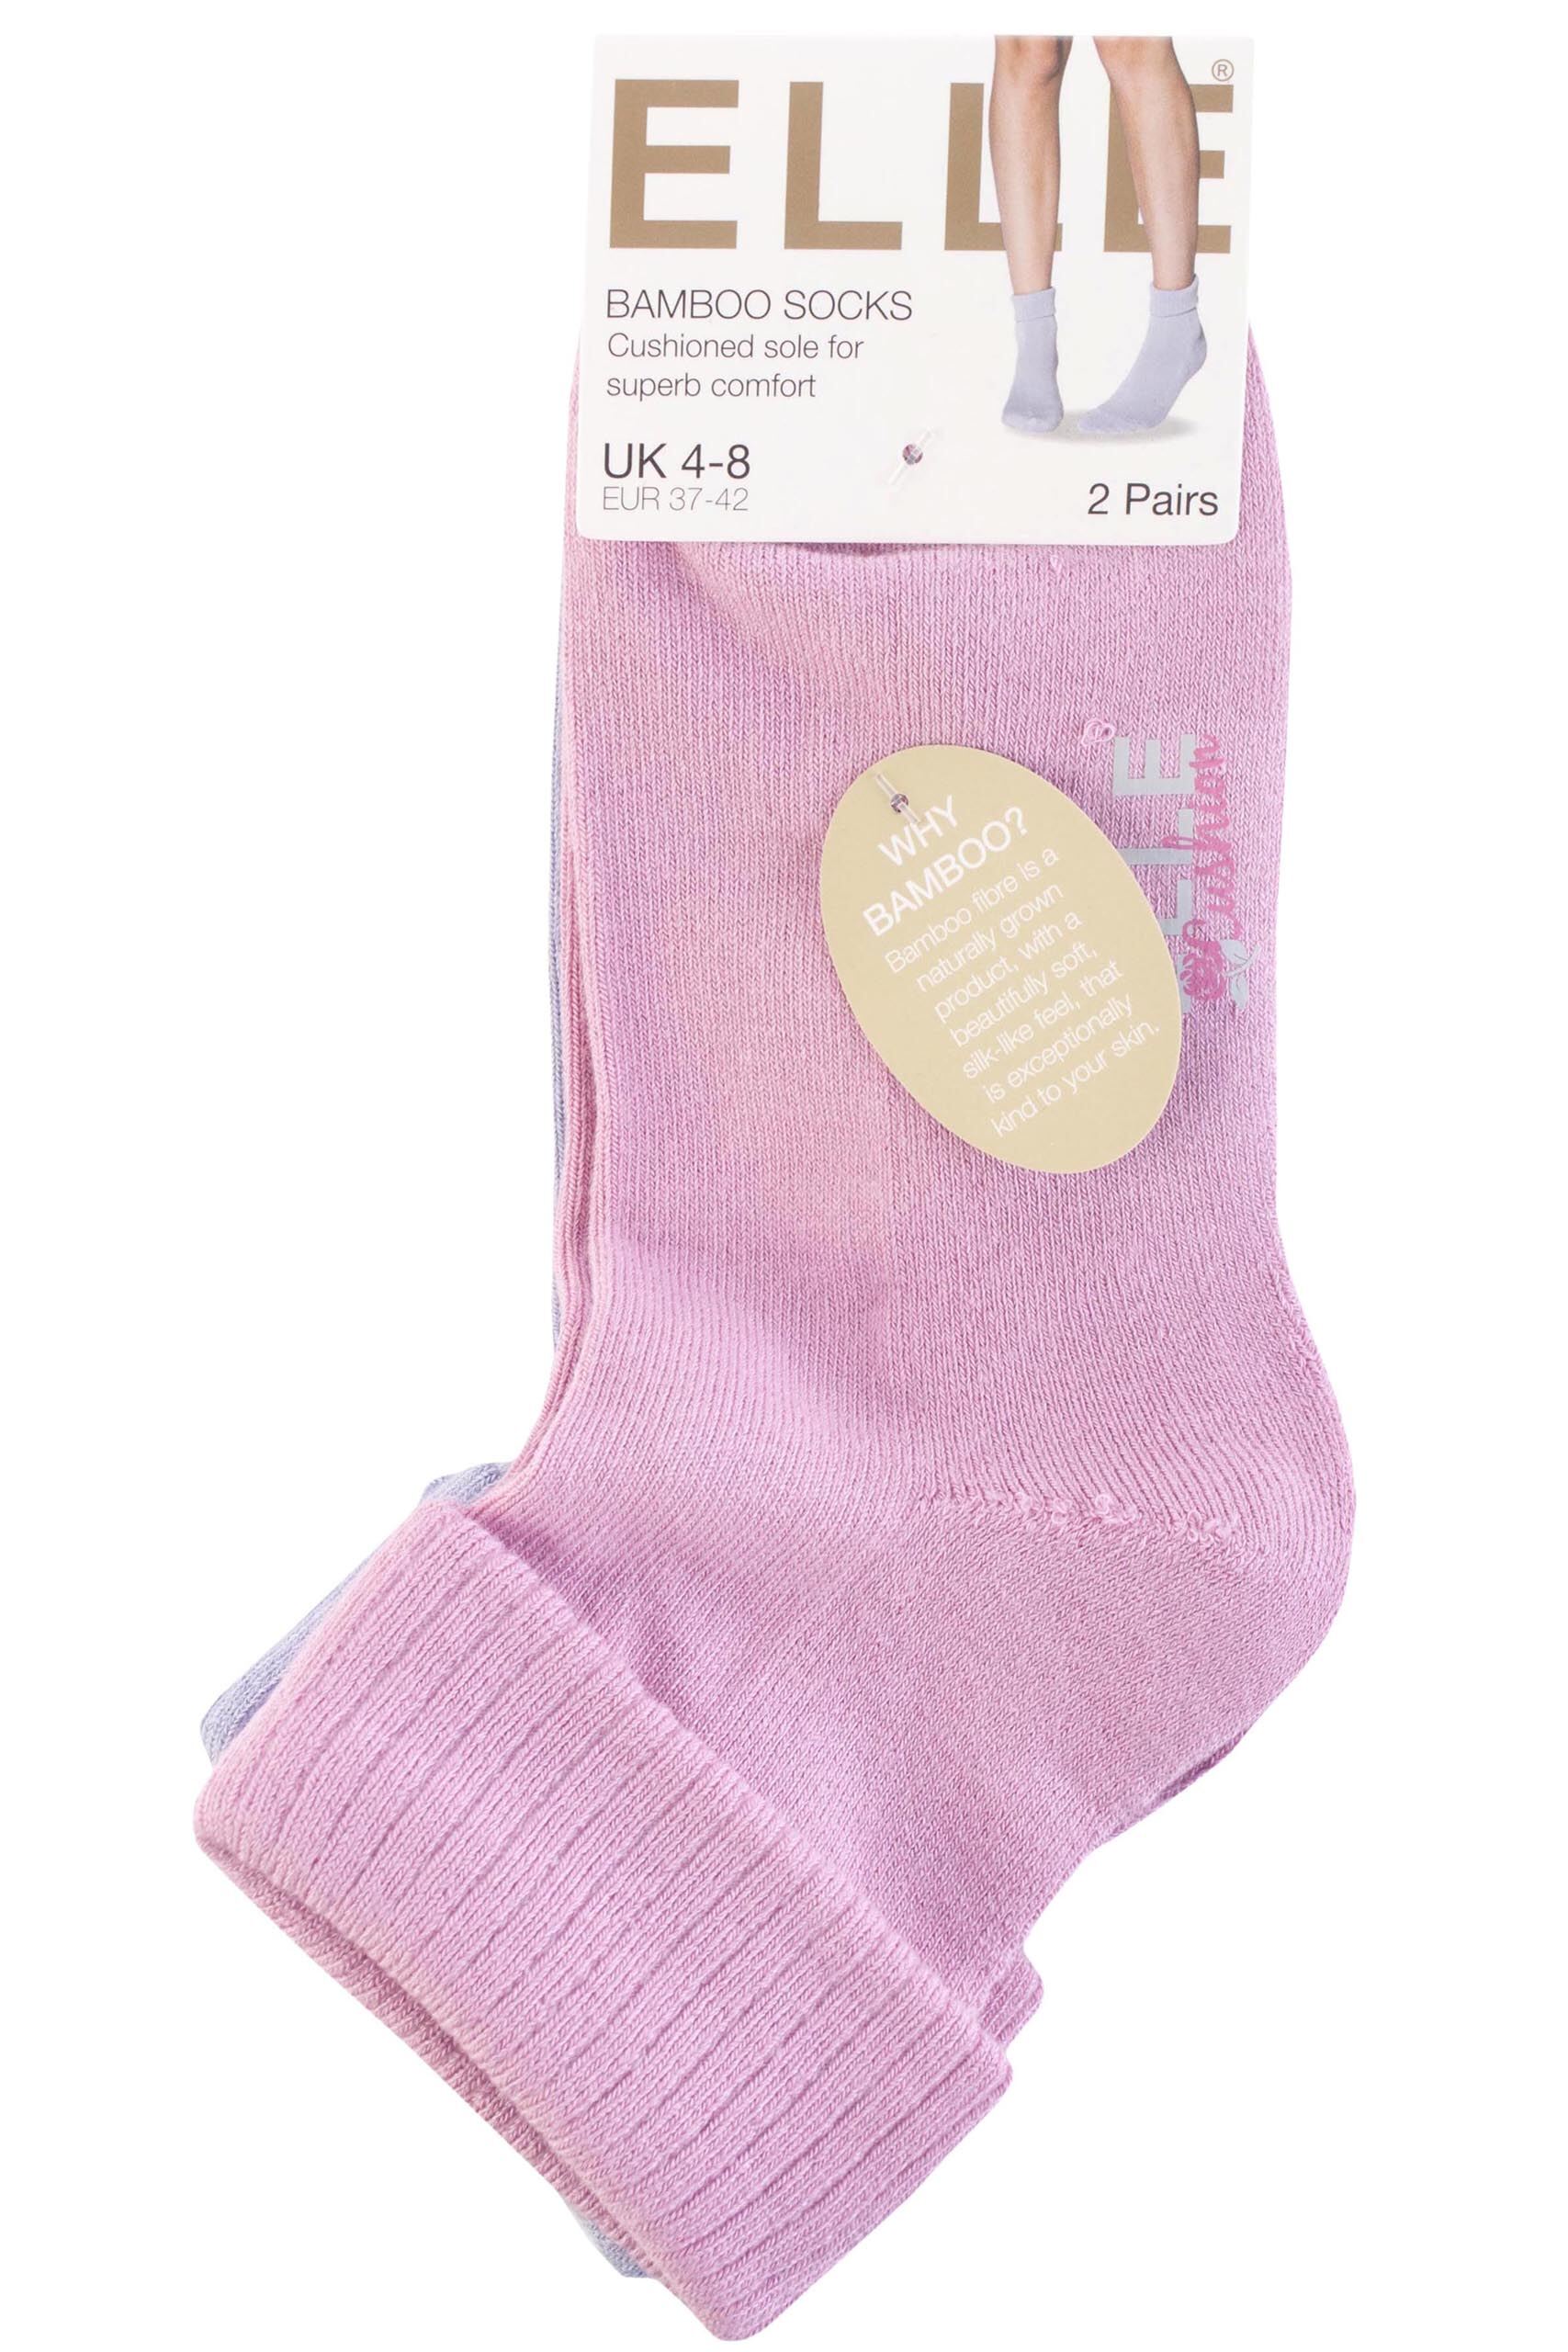 Elle Bamboo Ankle Socks With Cushion Sole | SockShop